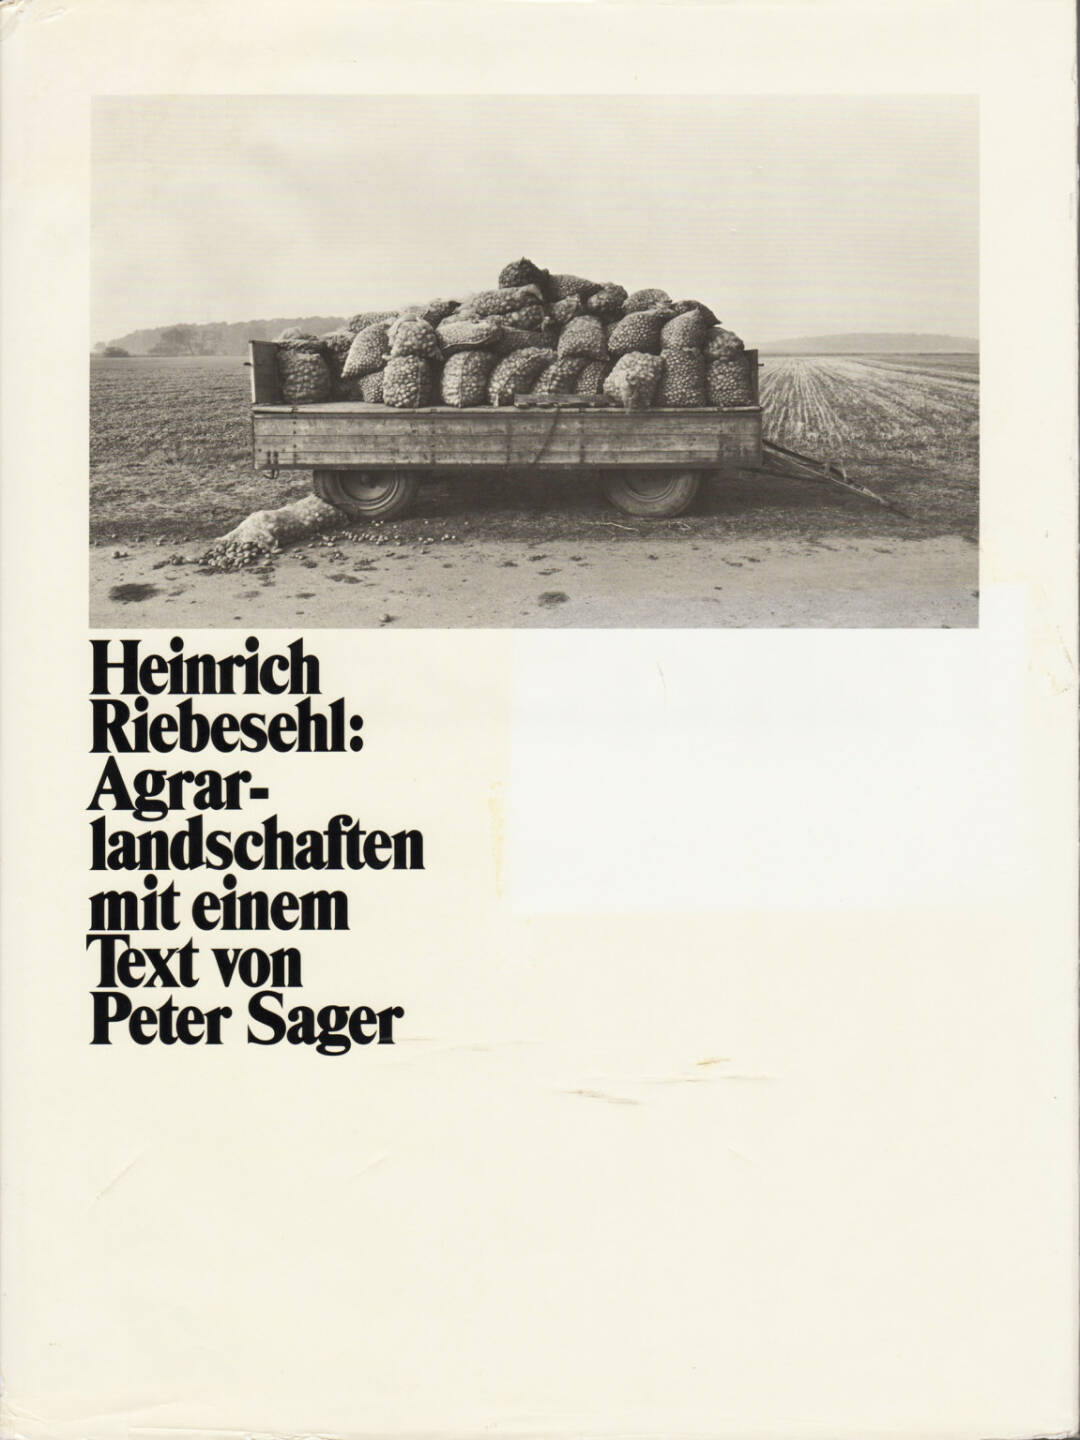 Heinrich Riebesehl - Agrarlandschaften, Schmalfeldt J.H. & Co 1979, Cover - http://josefchladek.com/book/heinrich_riebesehl_-_agrarlandschaften